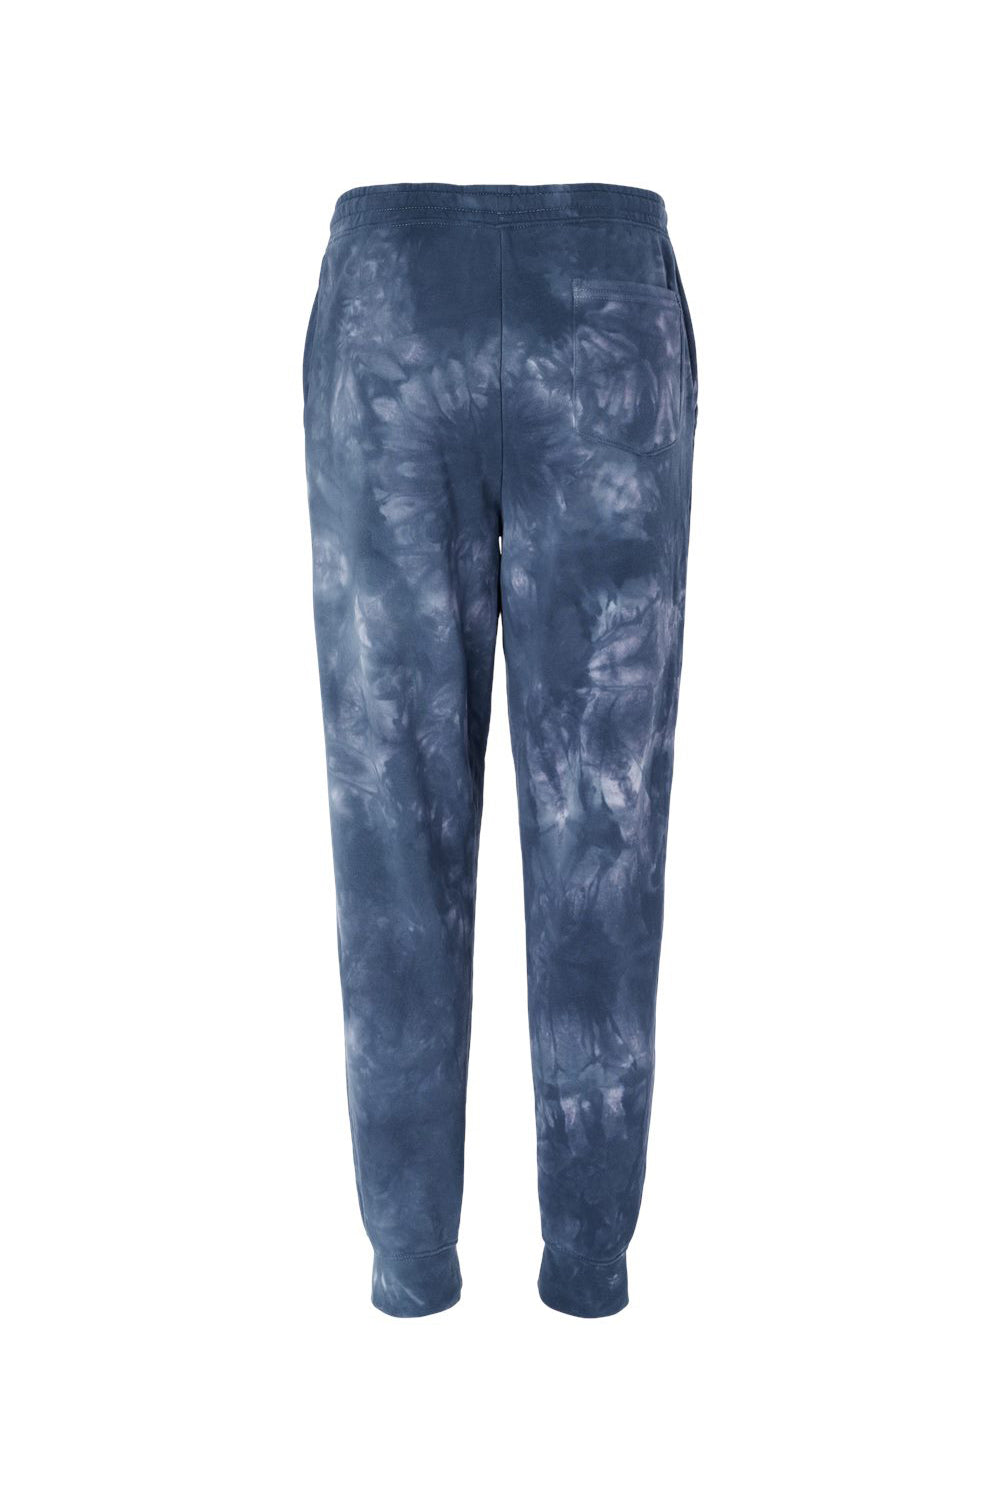 Independent Trading Co. PRM50PTTD Mens Tie-Dye Fleece Sweatpants w/ Pockets Navy Blue Flat Back